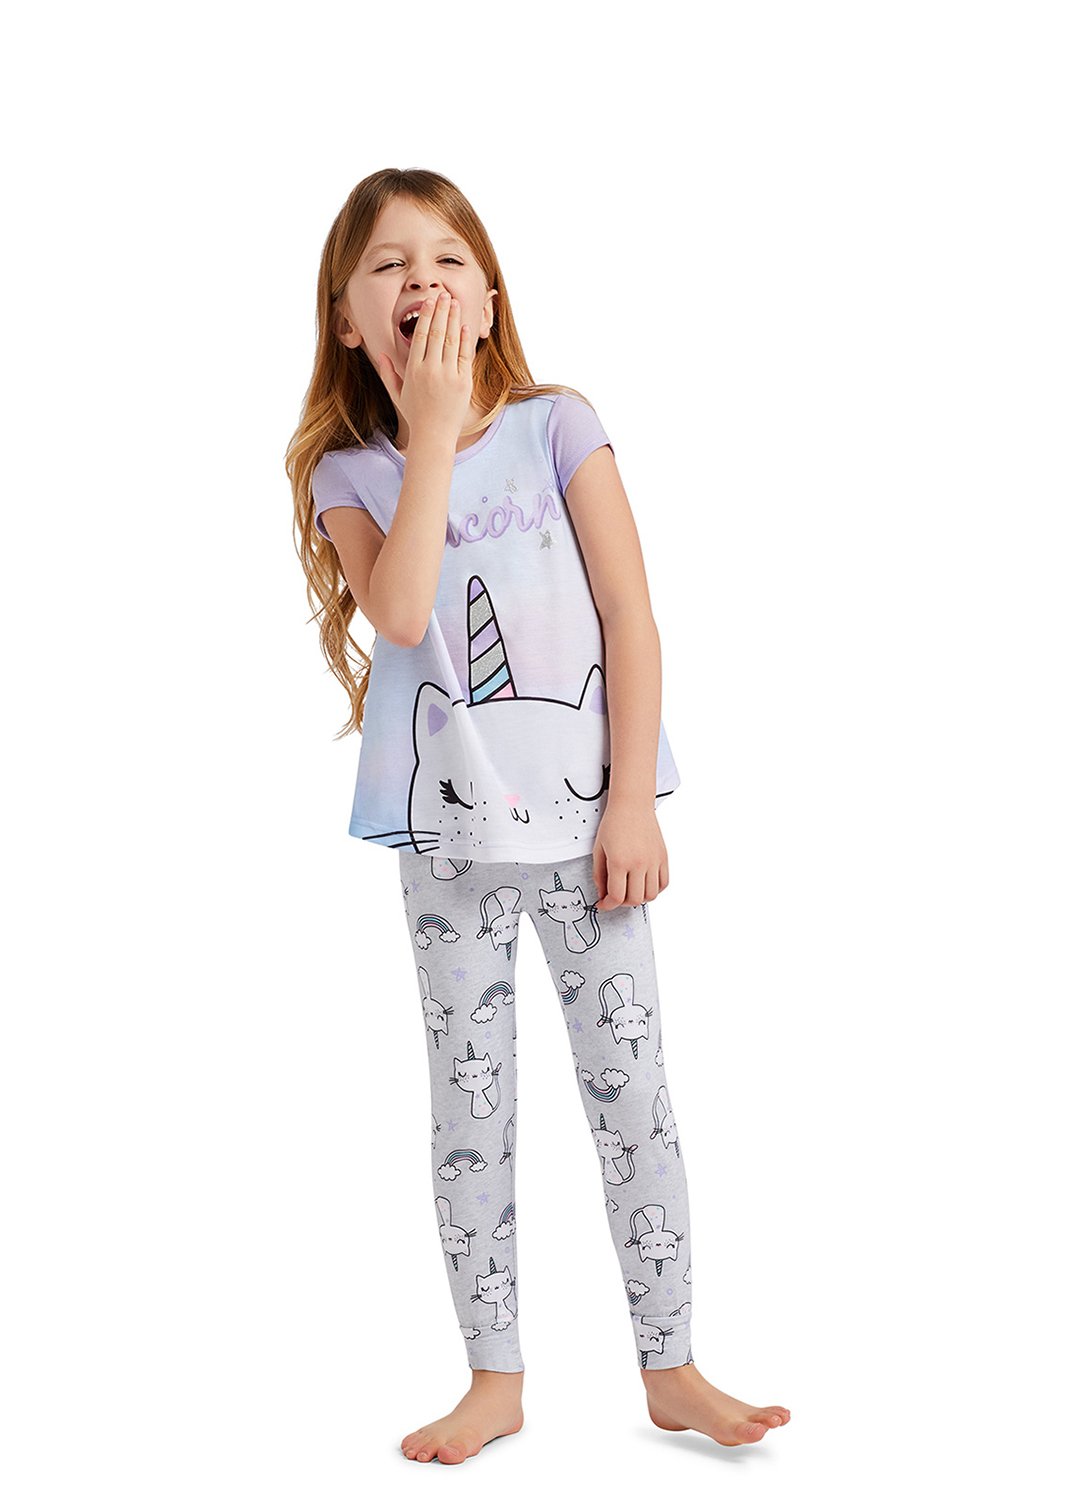 Girl yawning & wearing Lavender Caticorn Top & Gray Jogger Pants